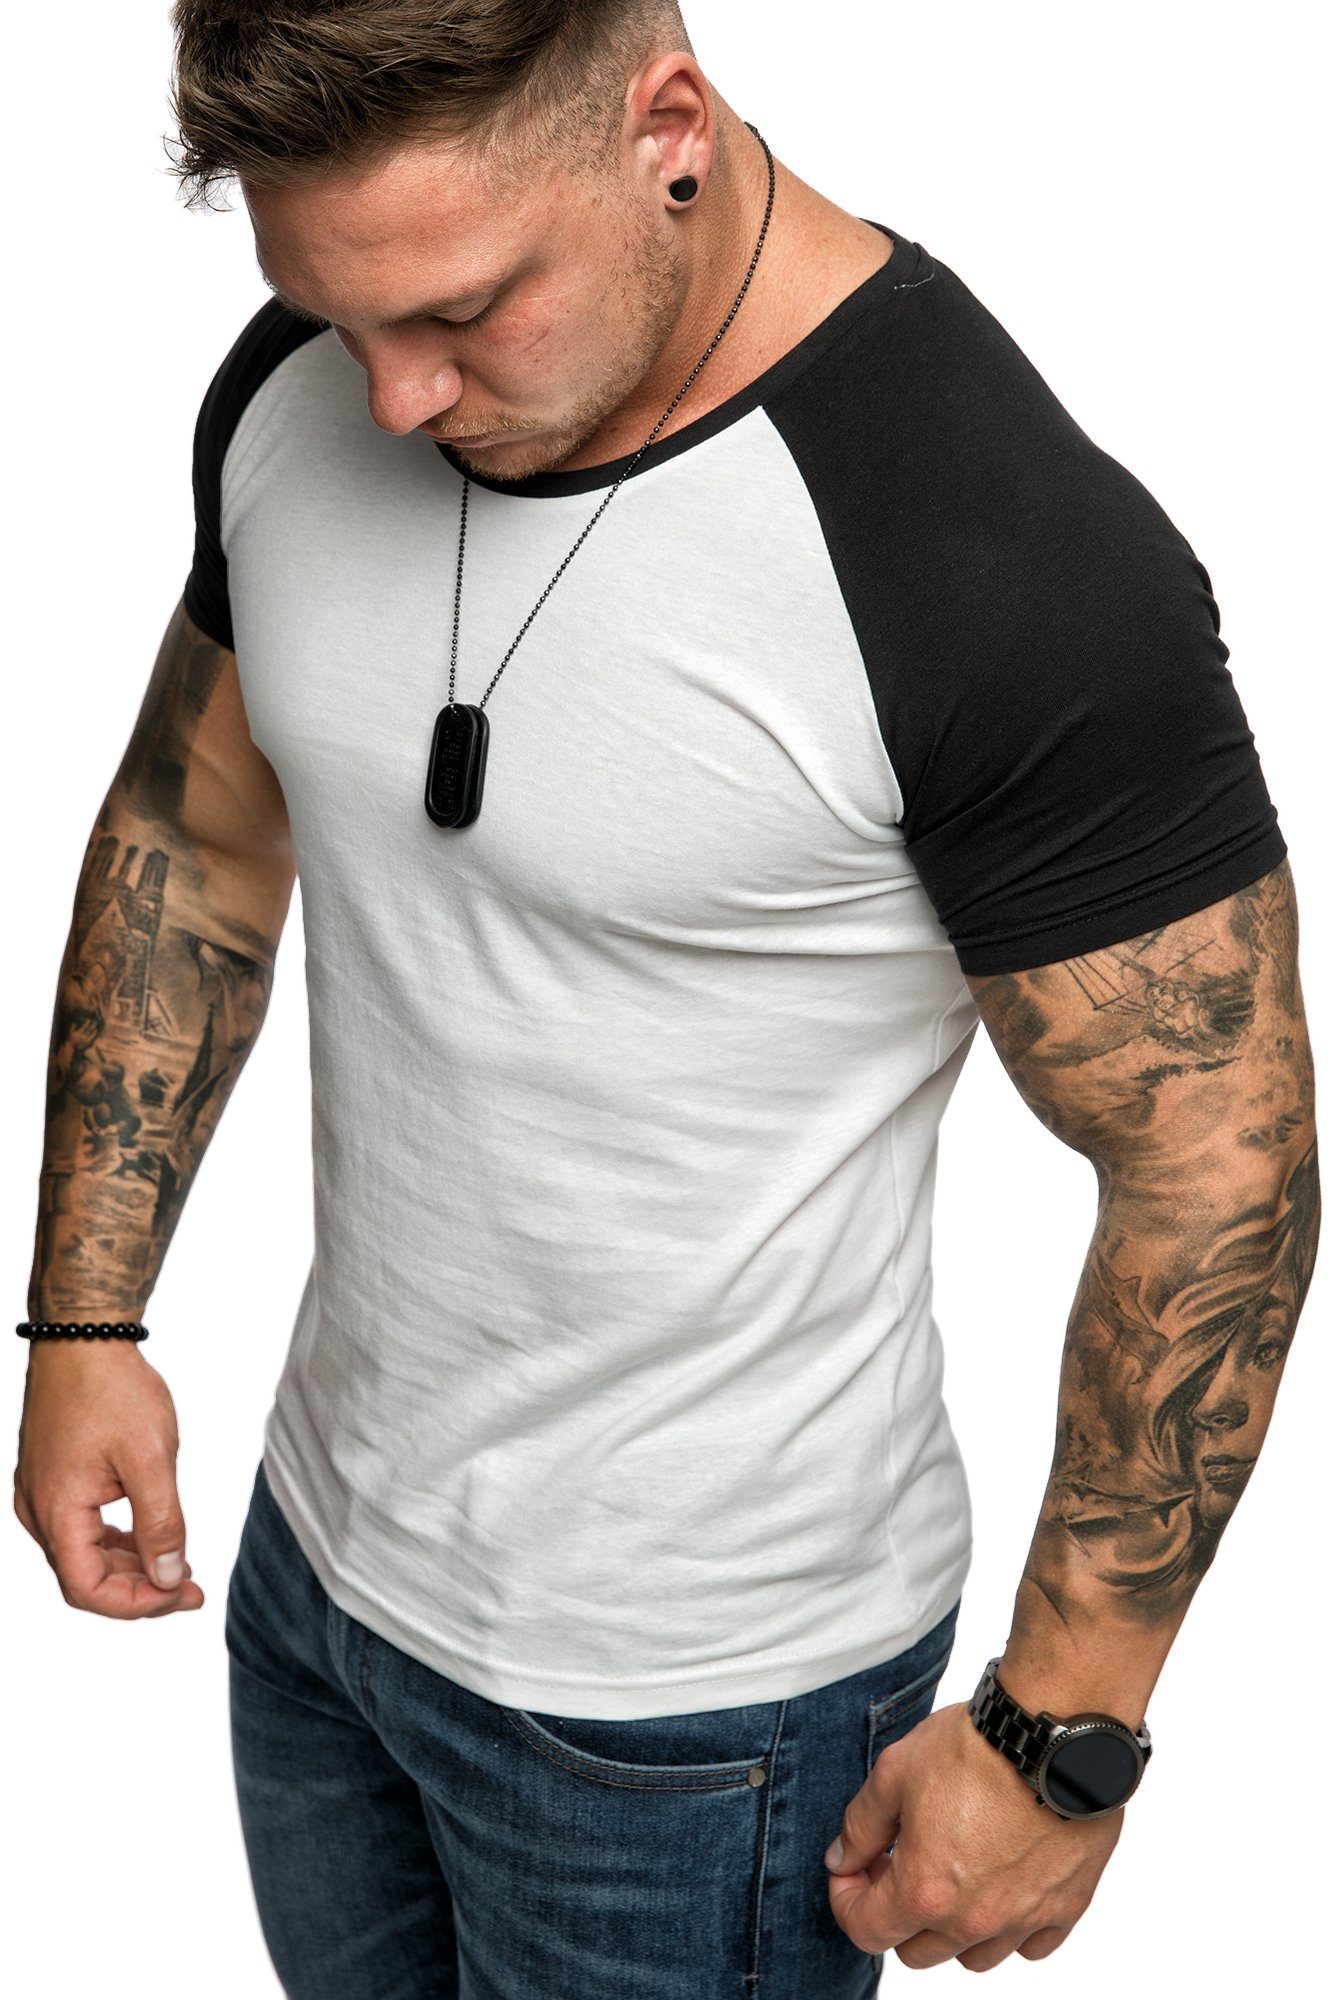 Amaci&Sons T-Shirt SALEM Basic Raglan T-Shirt mit Rundhalsausschnitt Herren Basic Raglan Shirt mit Rundhalsausschnitt Weiß/Schwarz